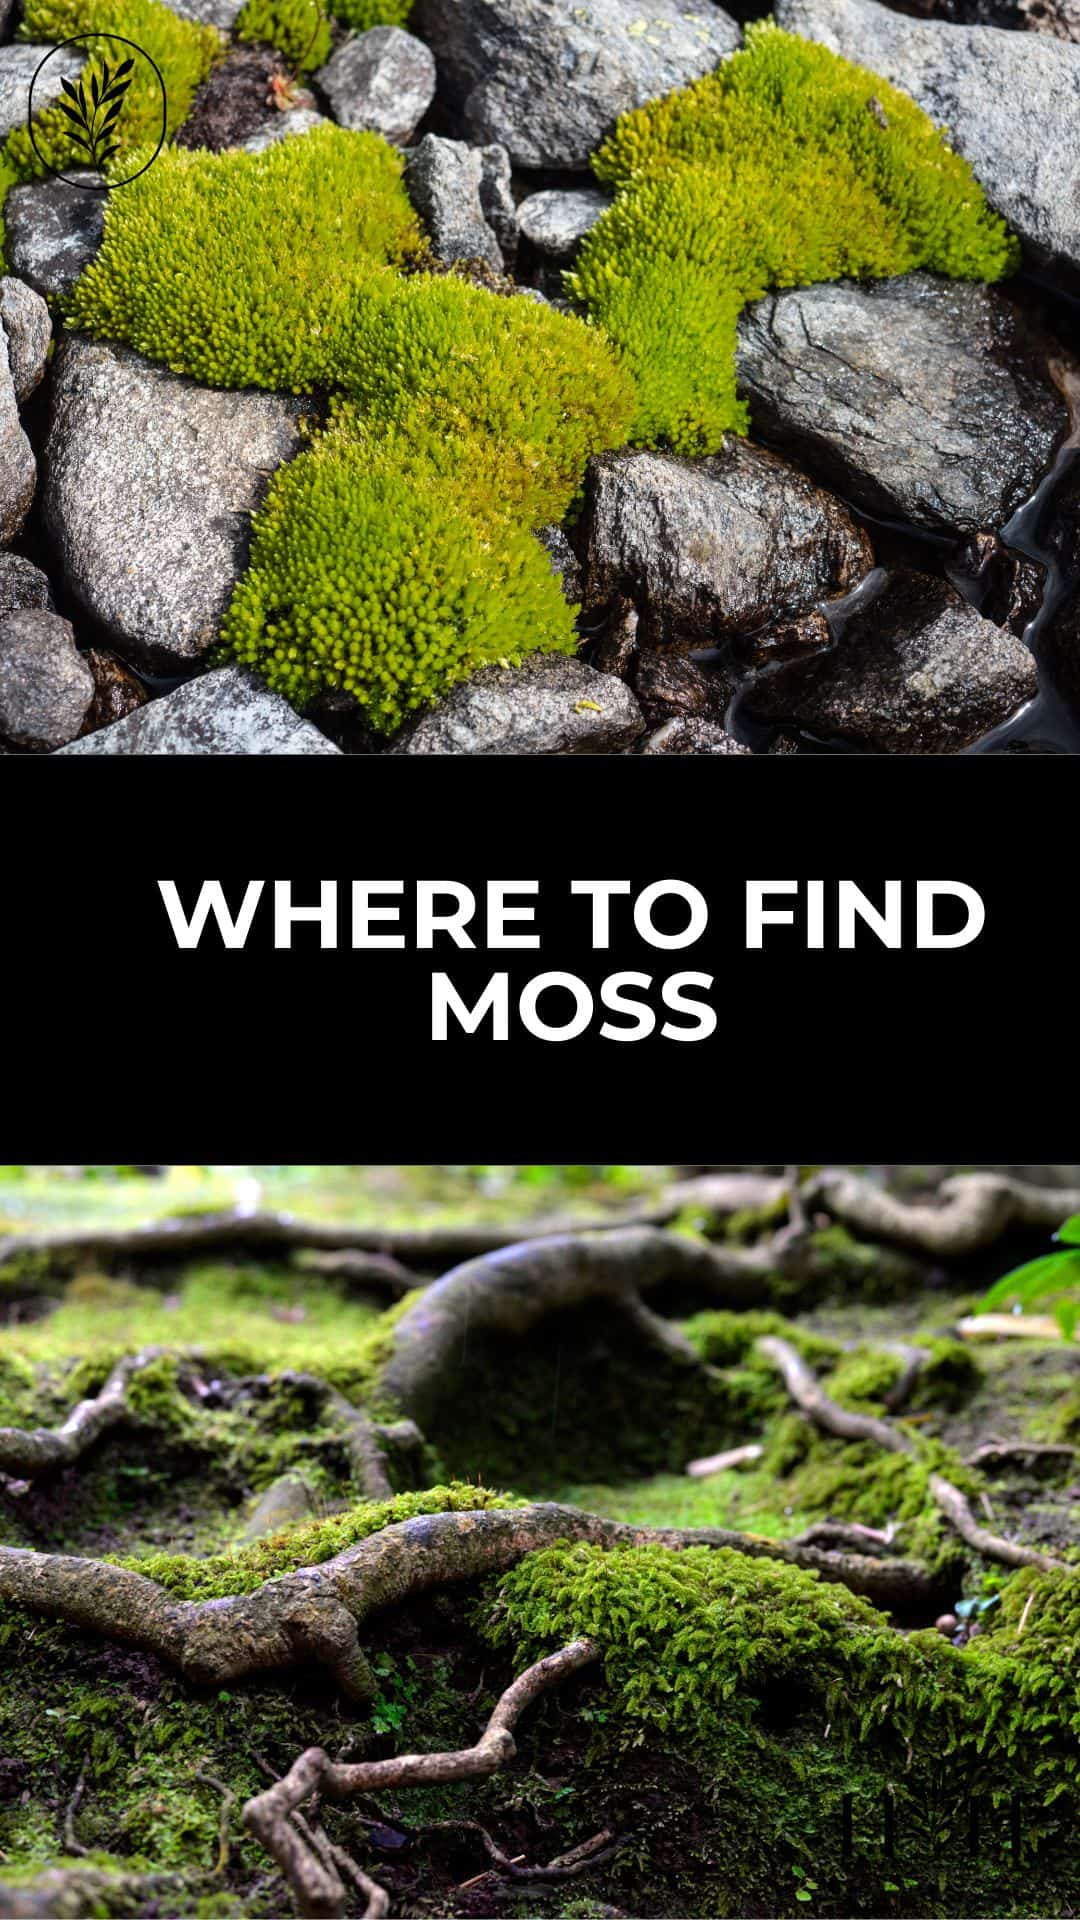 Where to find moss via @home4theharvest